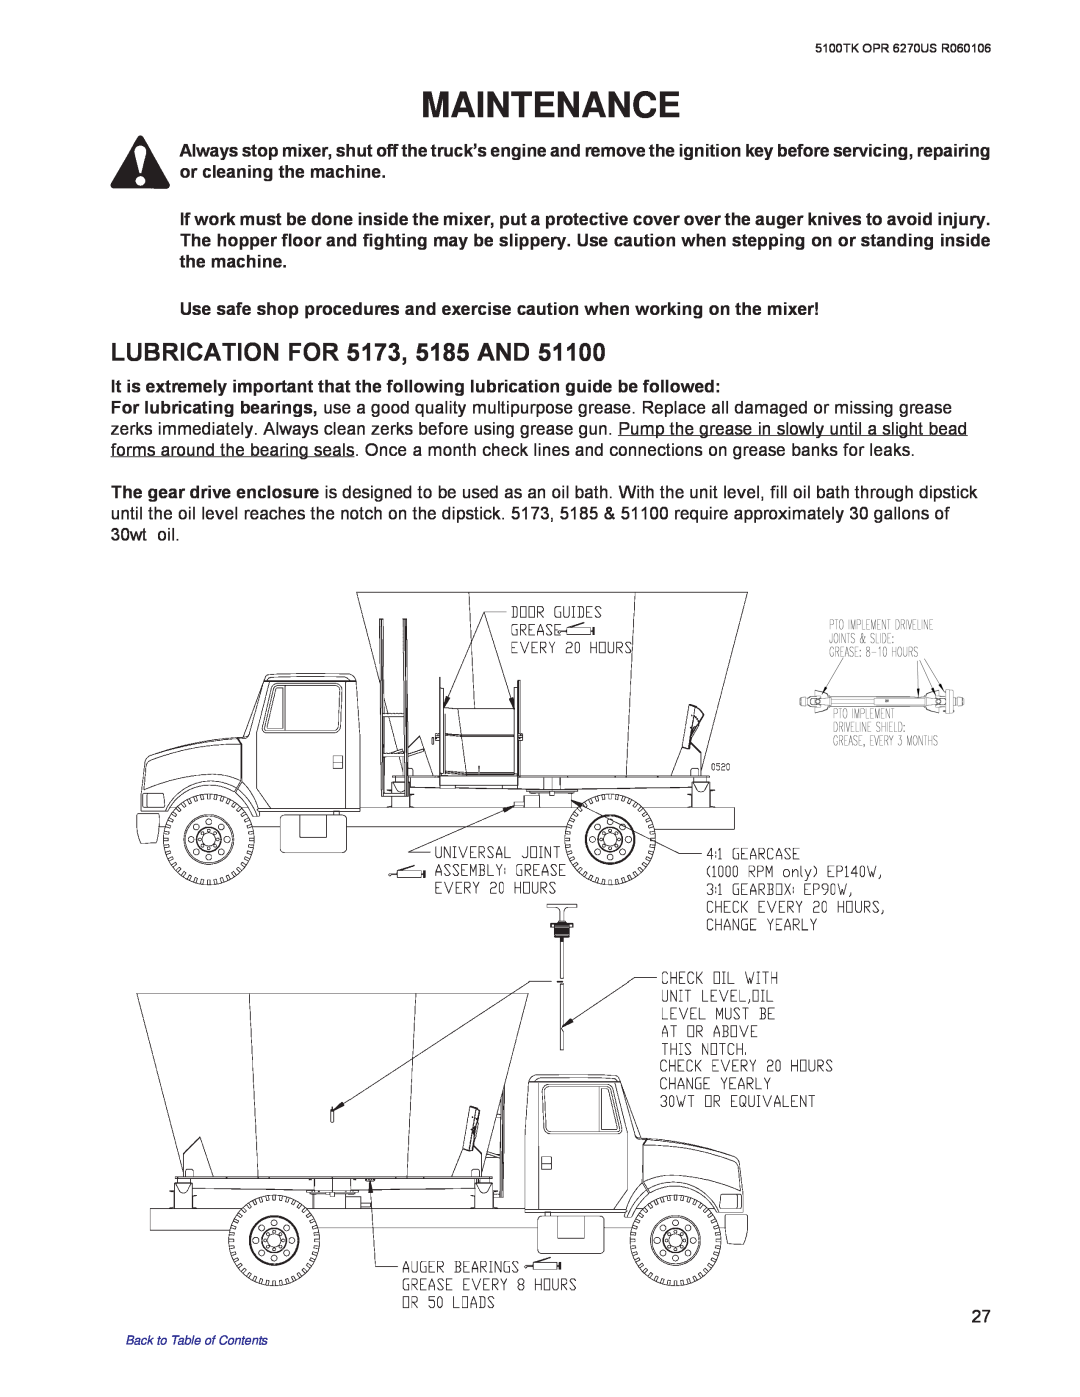 Kuhn Rikon 5100 instruction manual LUBRICATION FOR 5173, 5185 AND, Maintenance 